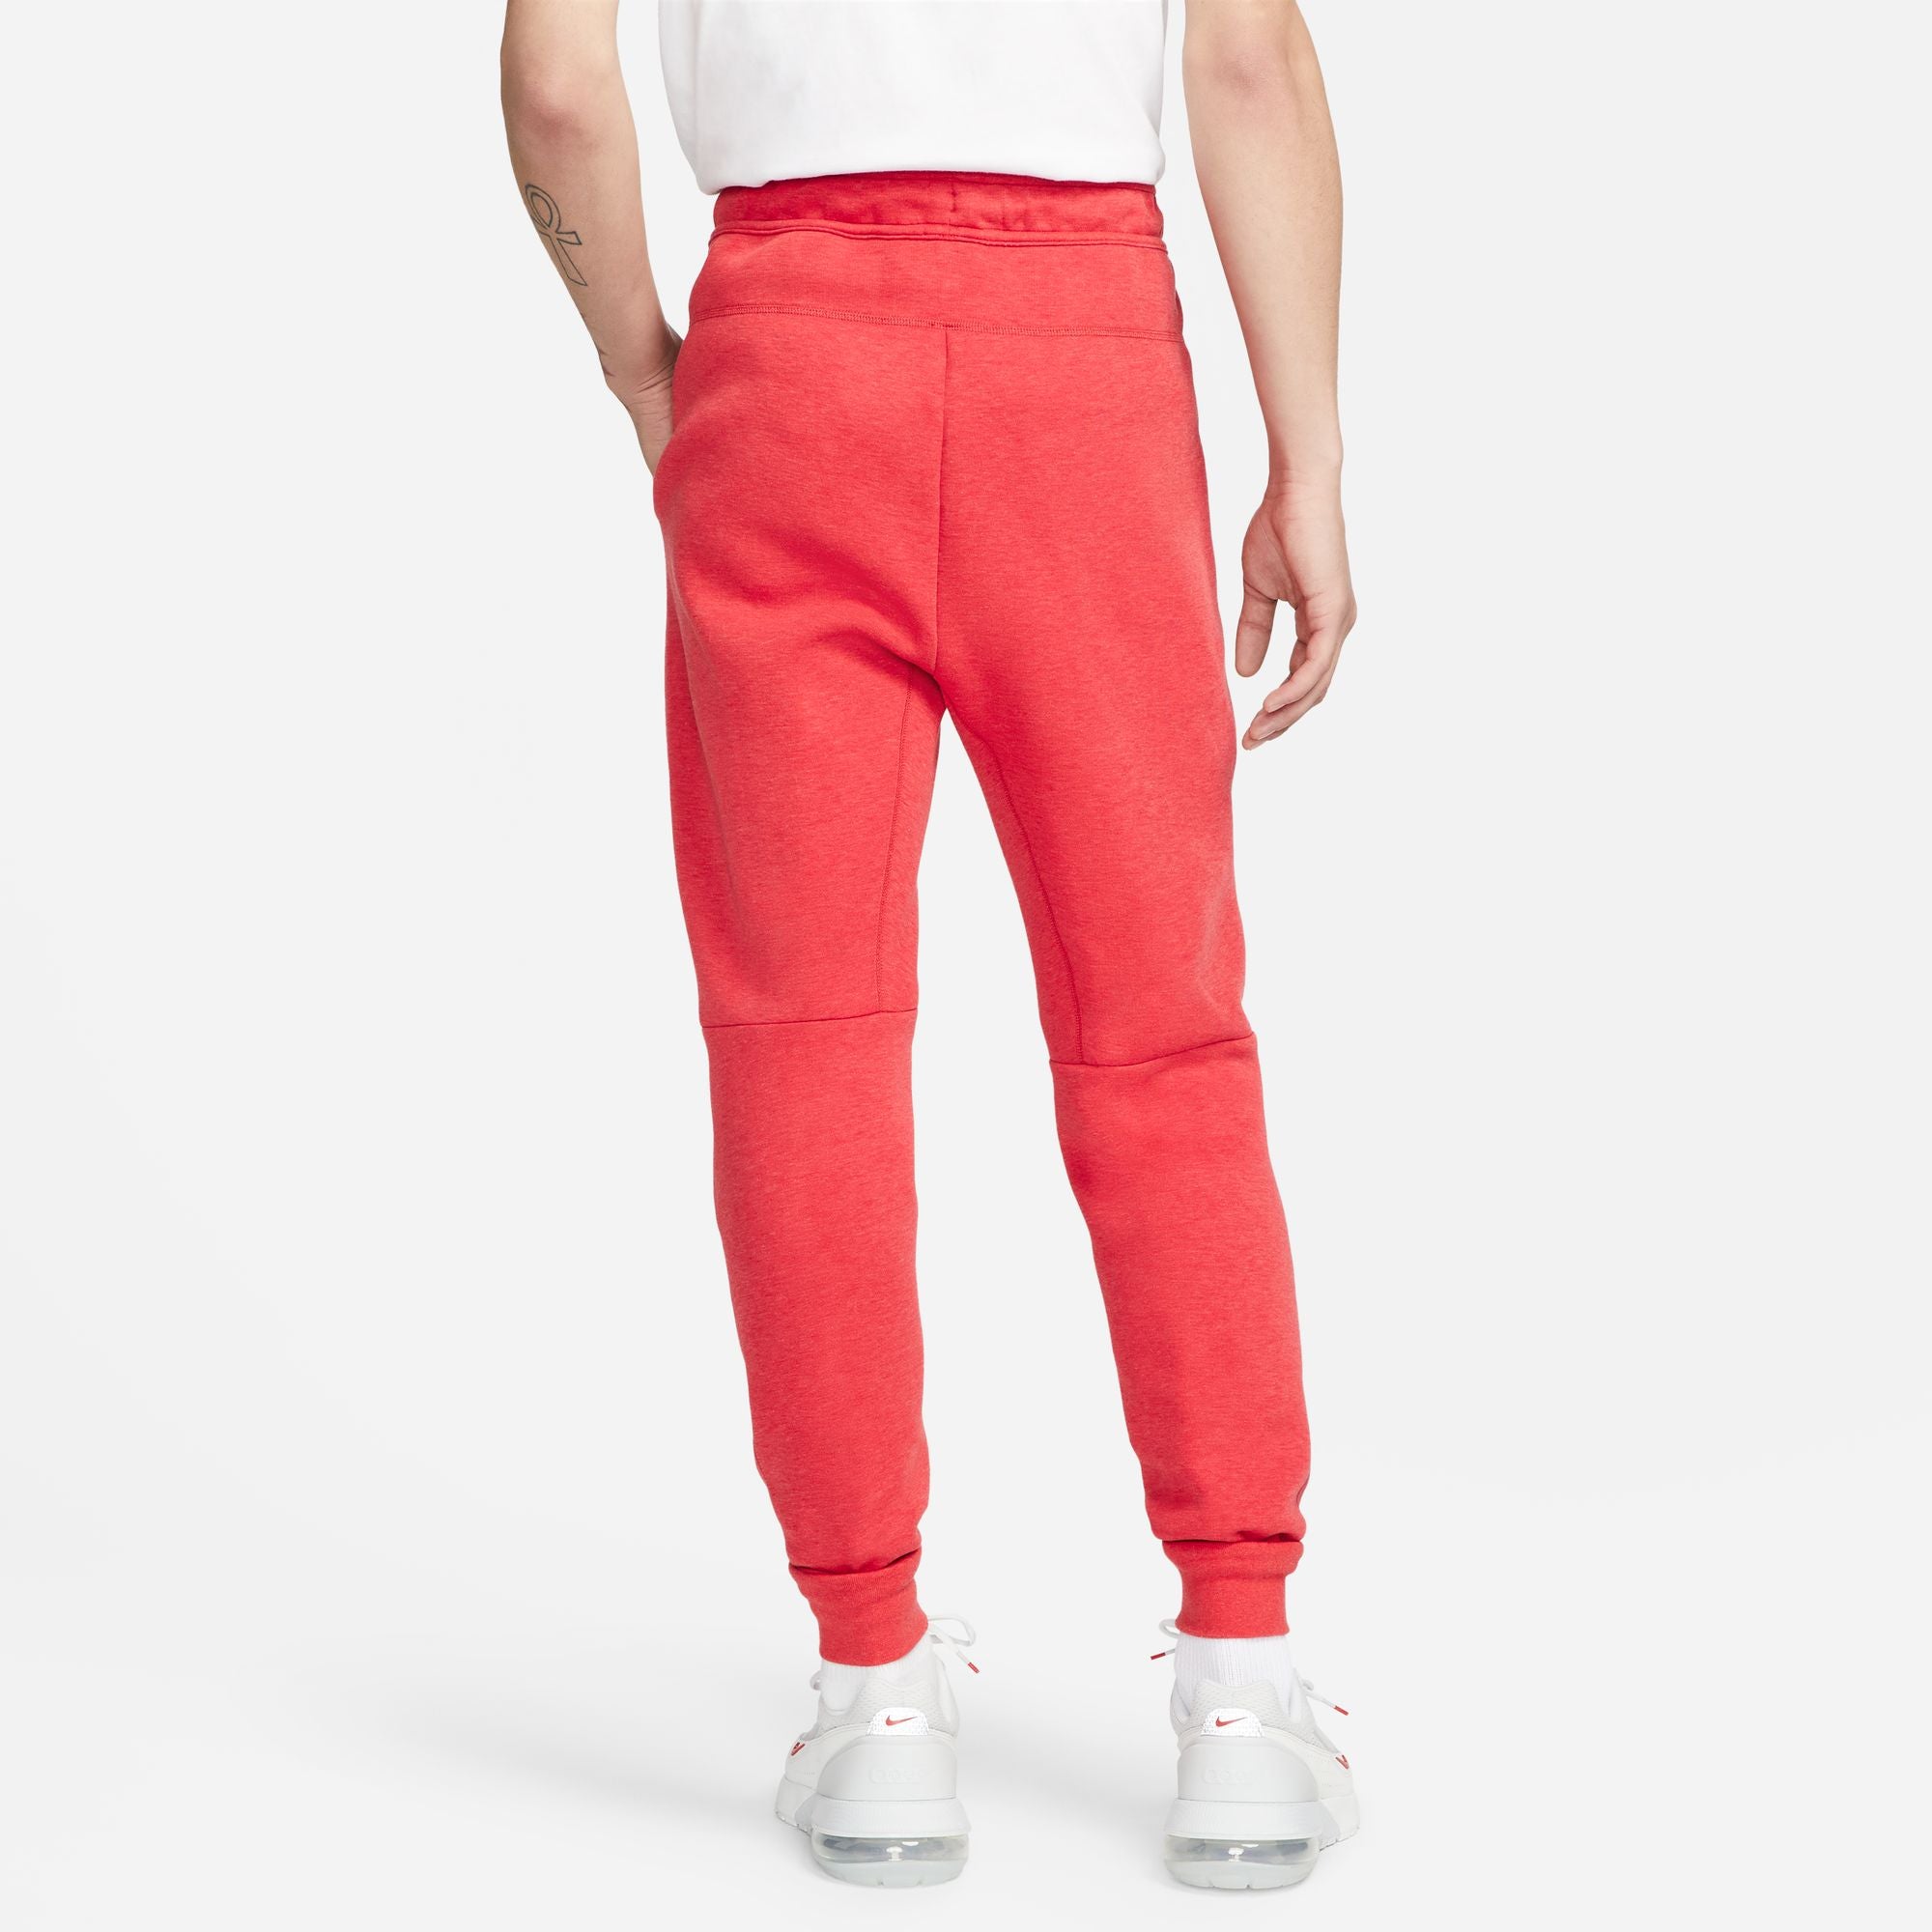 Pantalon Nike Tech Fleece - Rouge